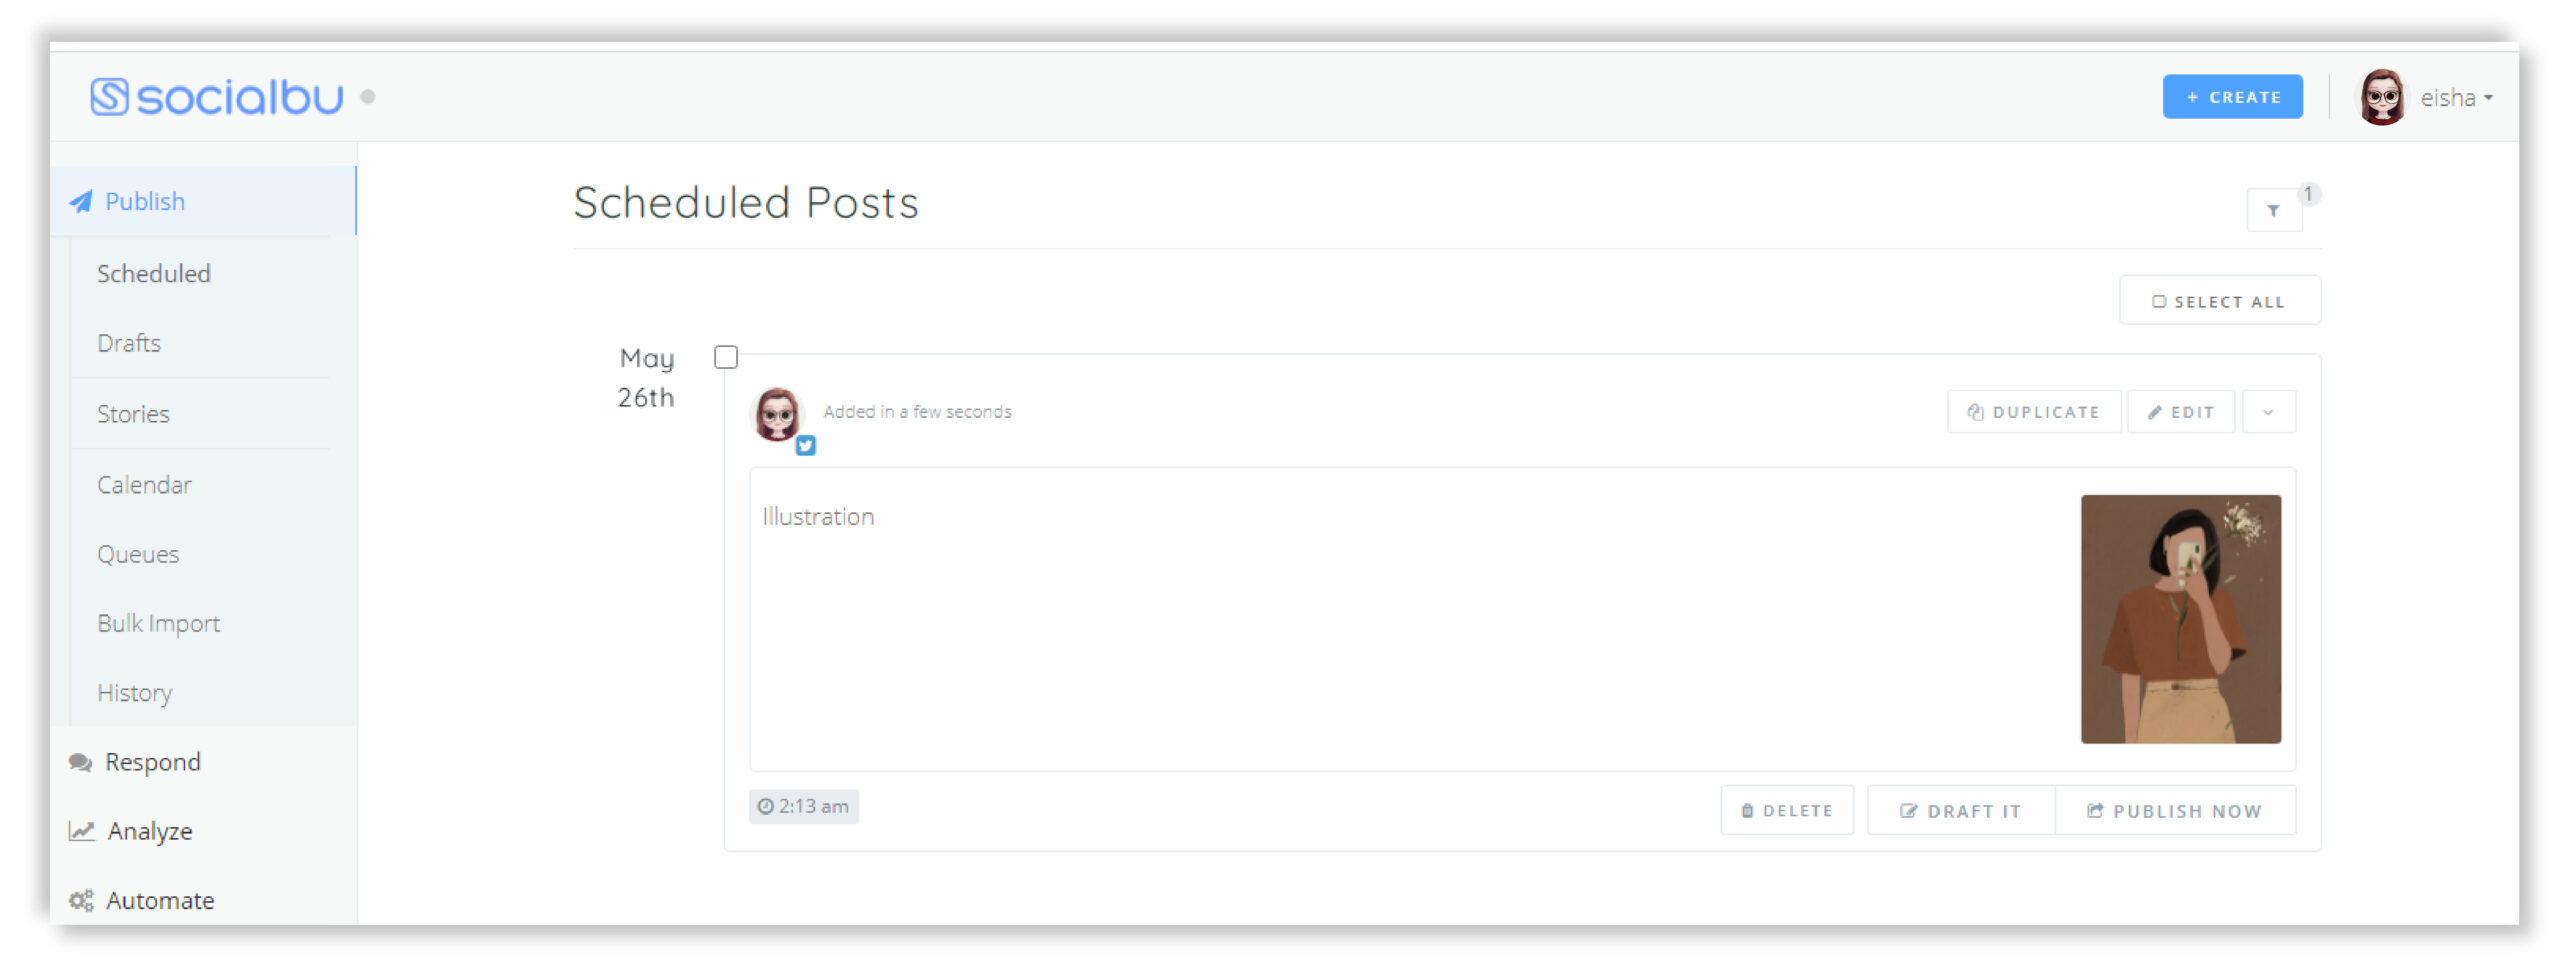 SocialBu dashboard - Hootsuite alternatives